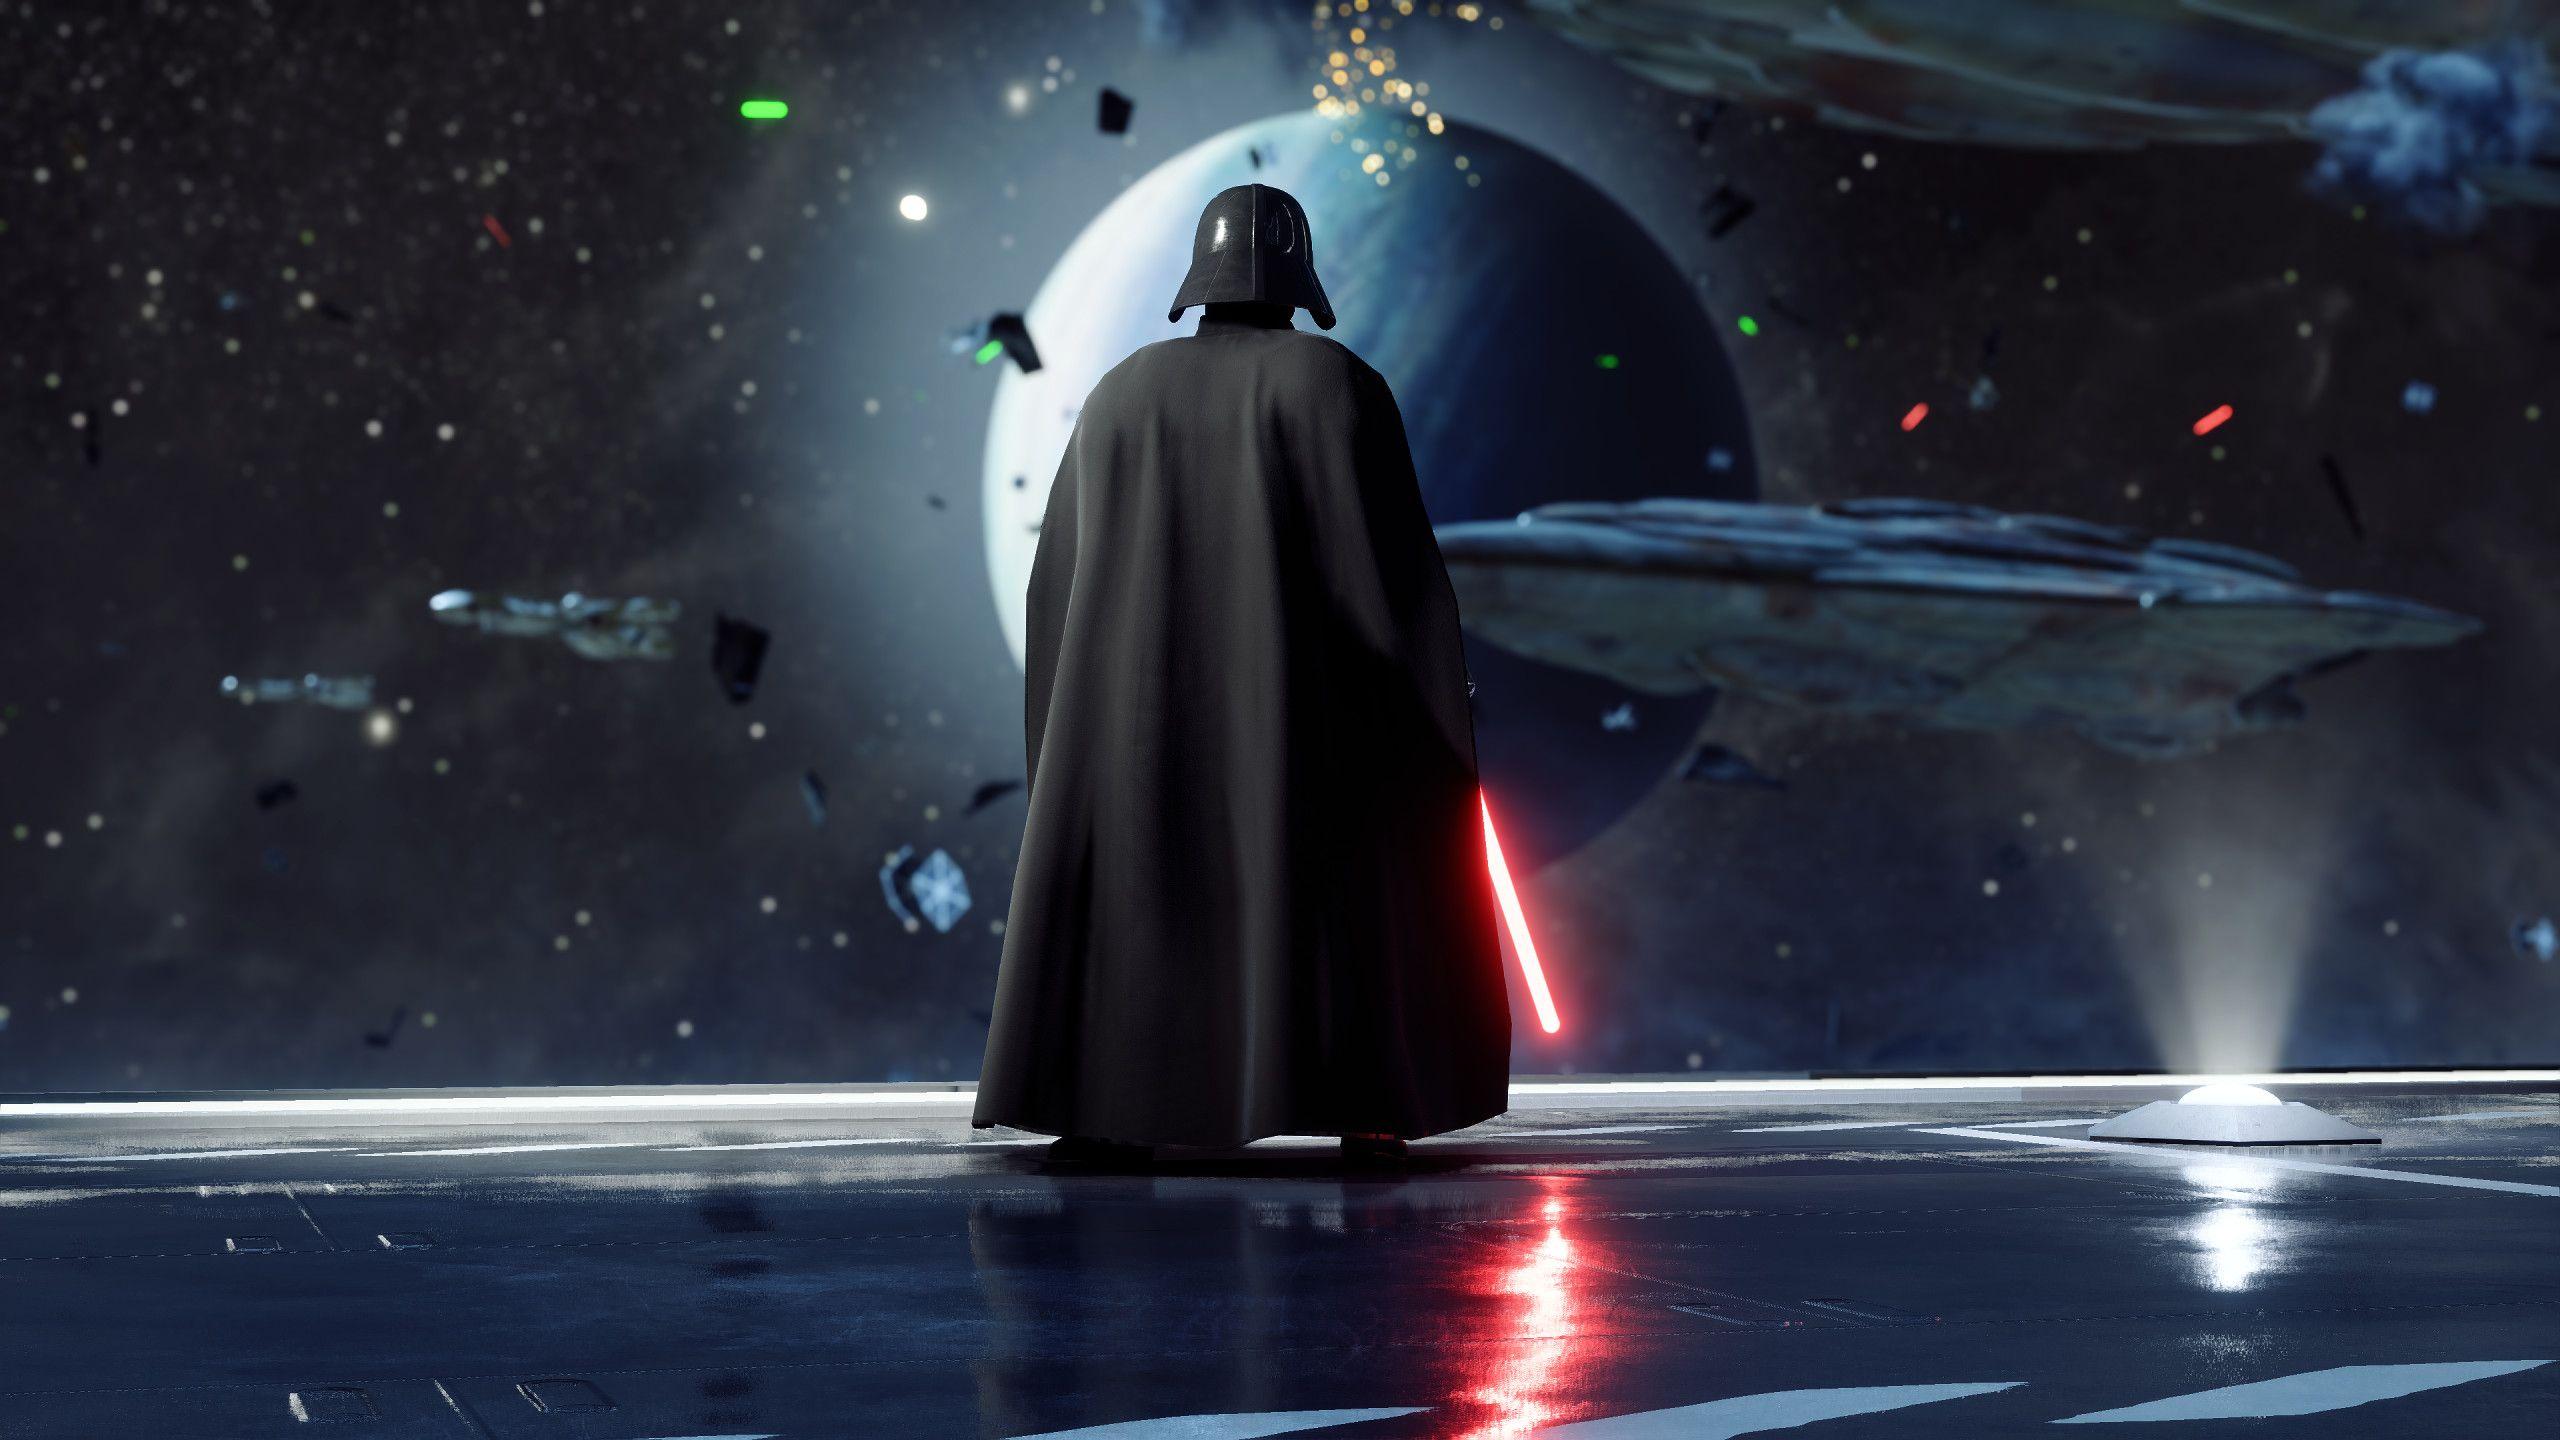 2560 x 1440 · jpeg - Darth Vader 4k Wallpapers - Top Free Darth Vader 4k Backgrounds ...